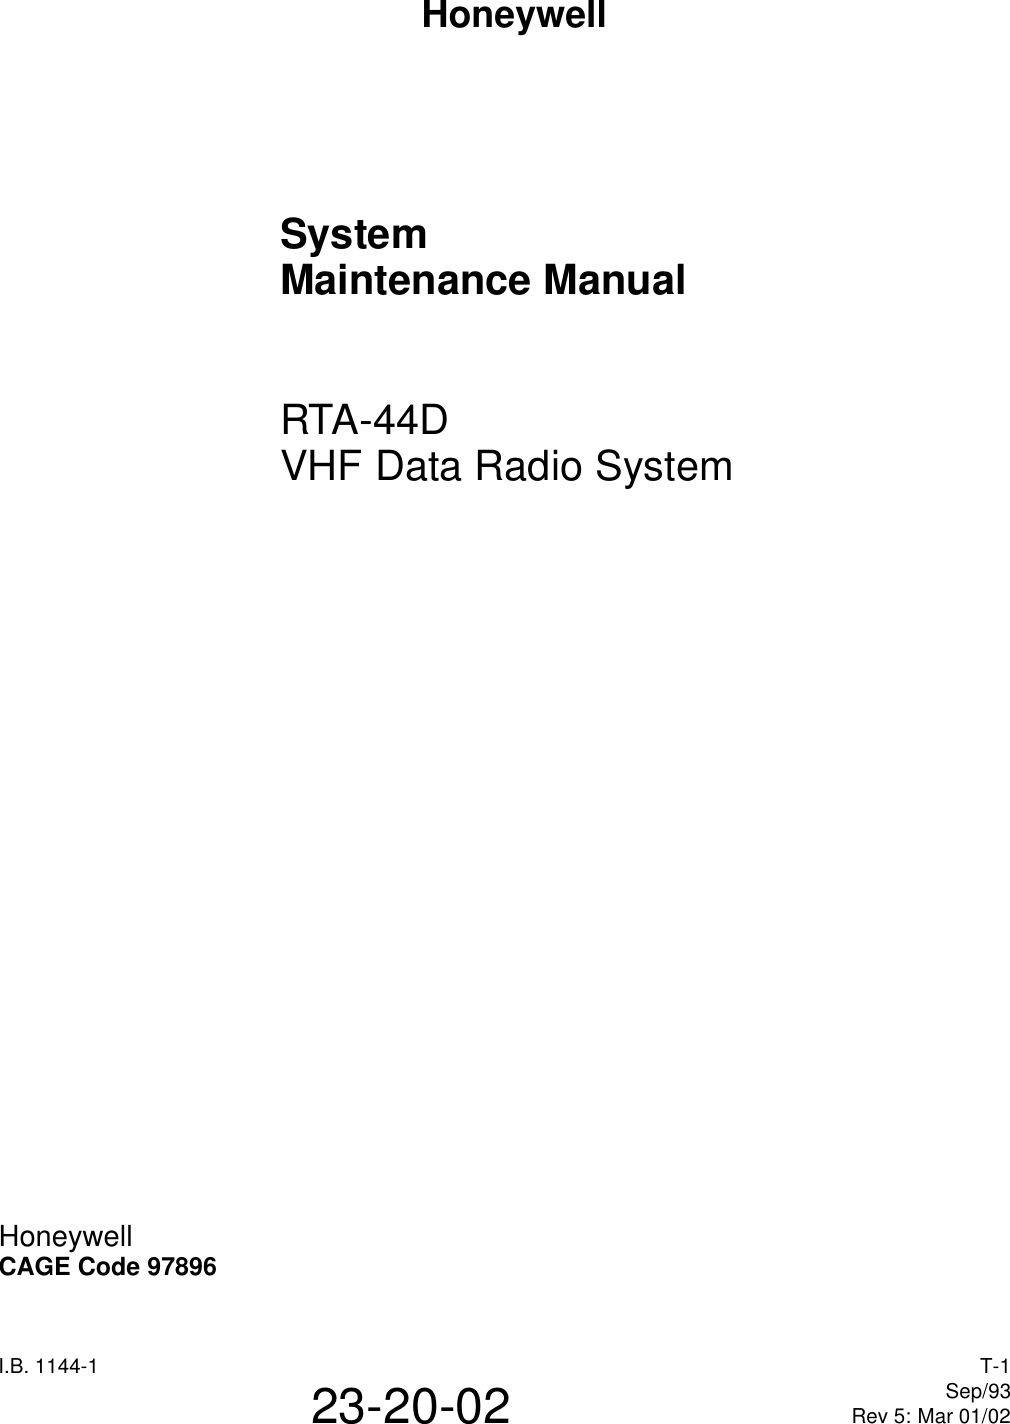 HoneywellI.B. 1144-1 T-1Sep/93Rev 5: Mar 01/0223-20-02SystemMaintenance ManualRTA-44DVHF Data Radio SystemHoneywellCAGE Code 97896